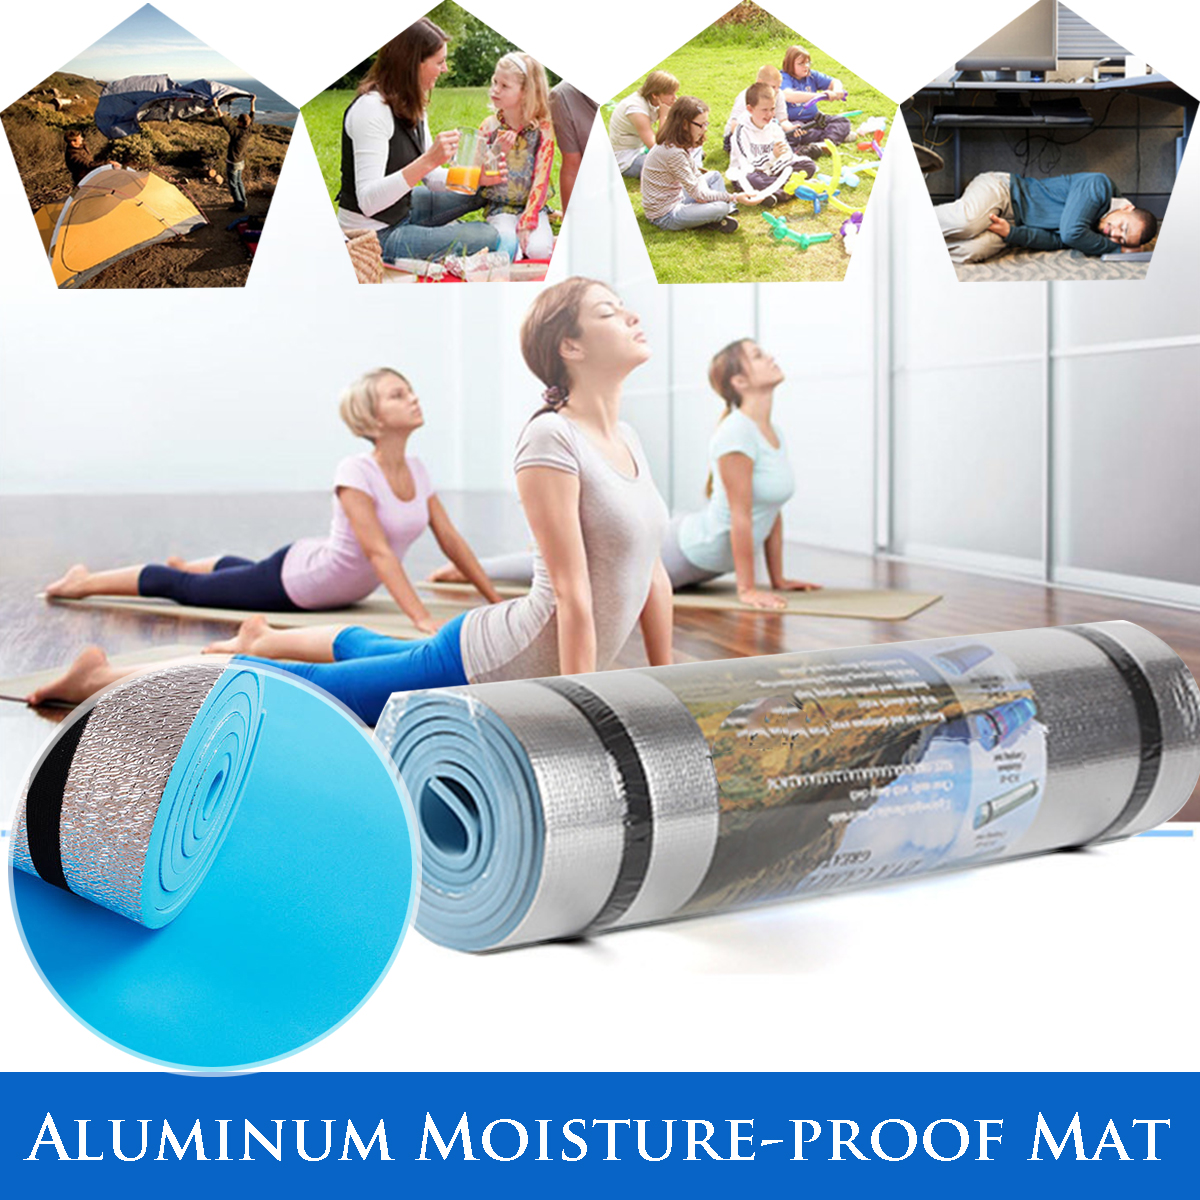 Aluminum-Film-Moisture-proof-Yoga-Mat-Workout-Exercise-Gym-Fitness-Pilates-Picnic-Mat-Baby-Kids-Play-1650713-1